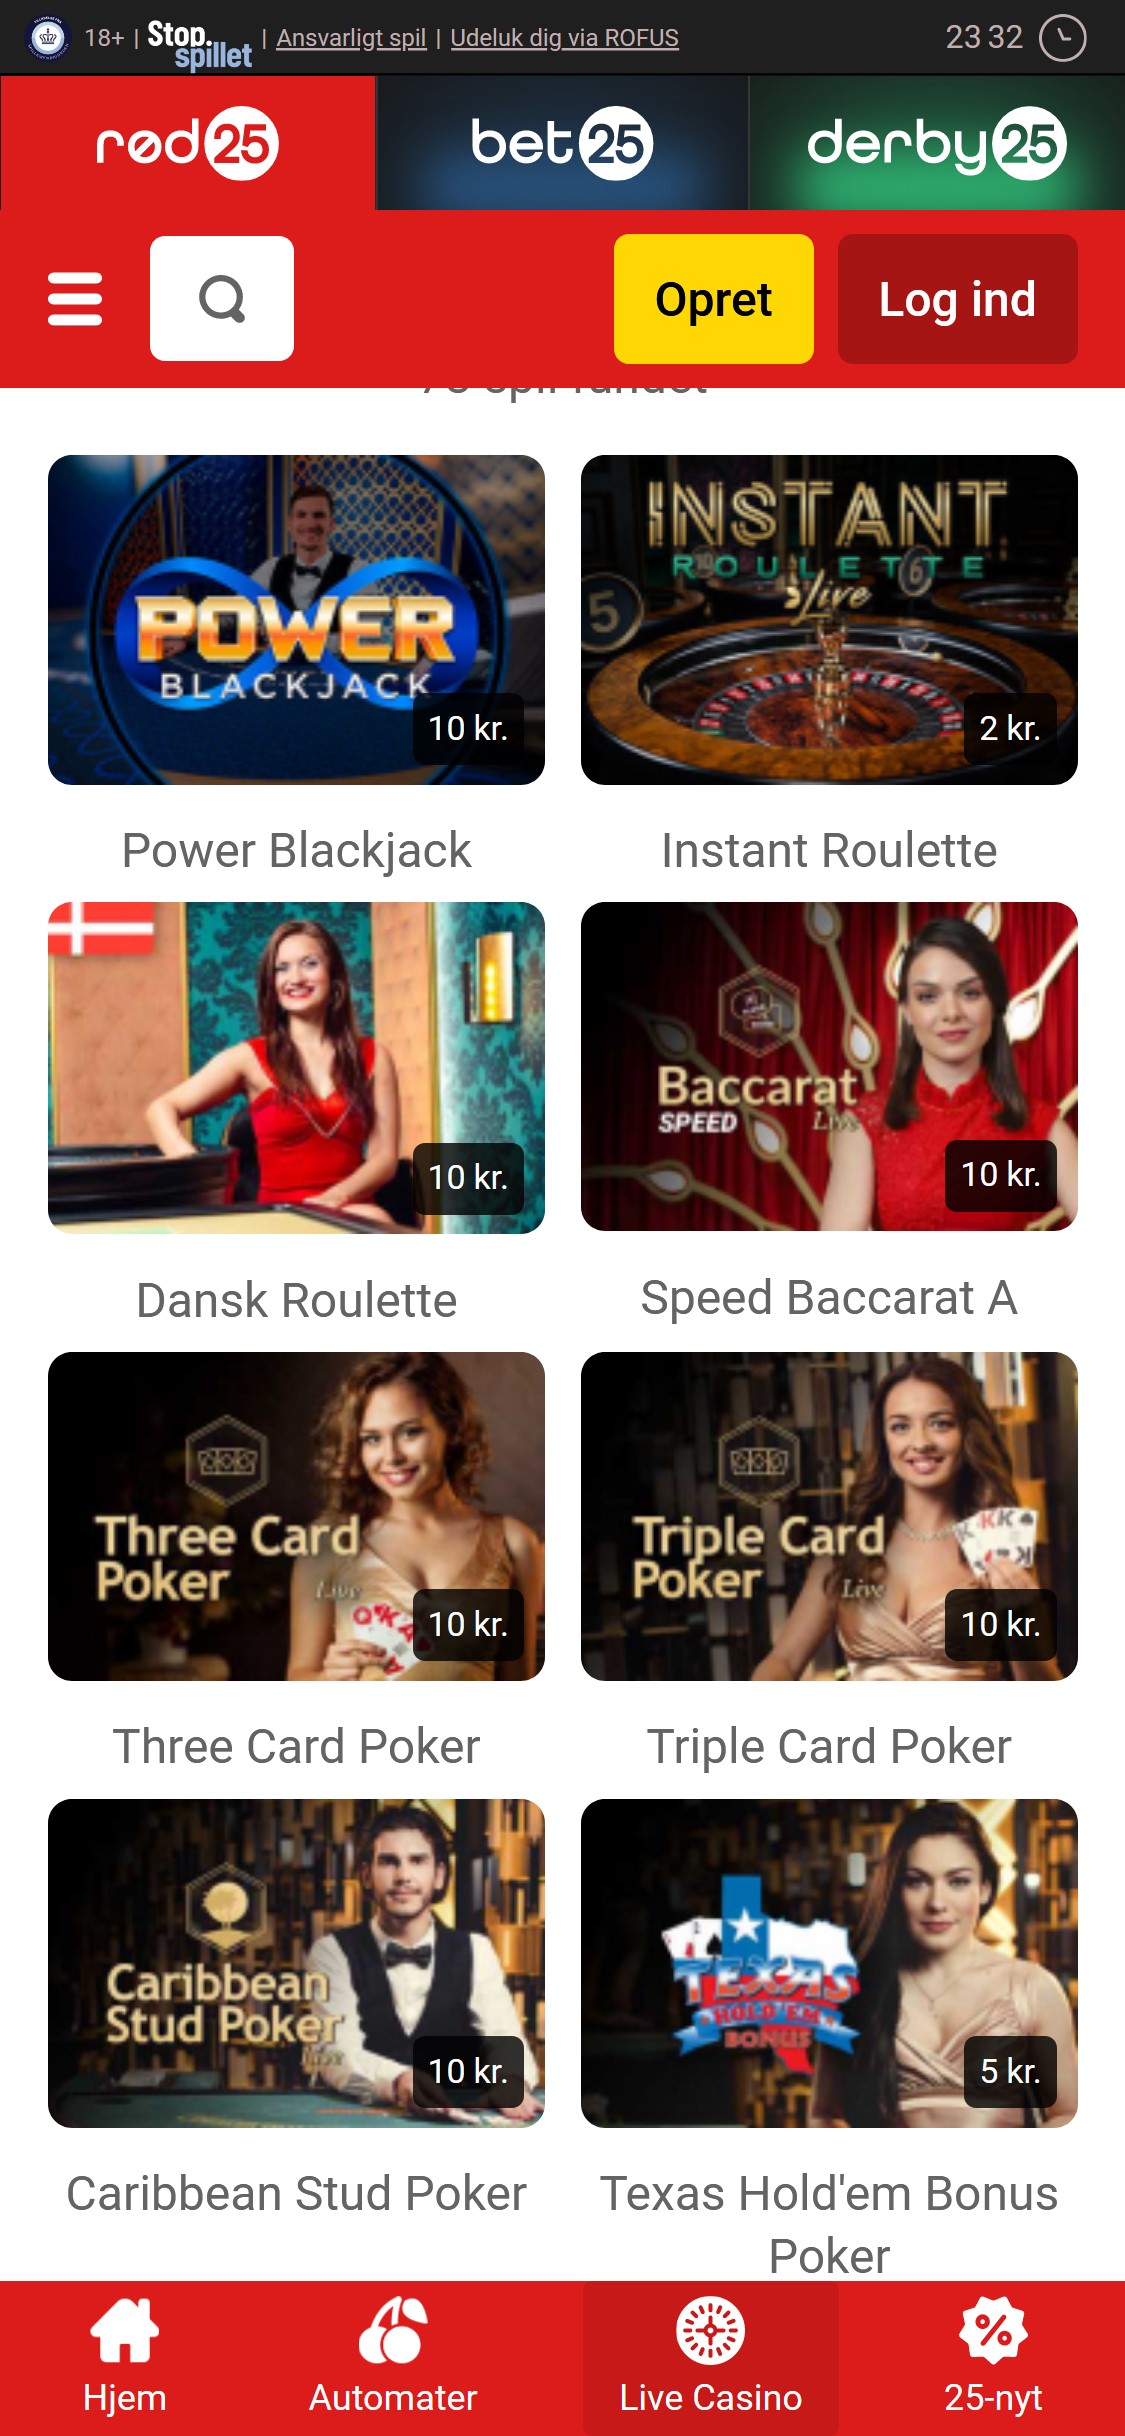 Rod 25 Casino Mobile Live Dealer Games Review